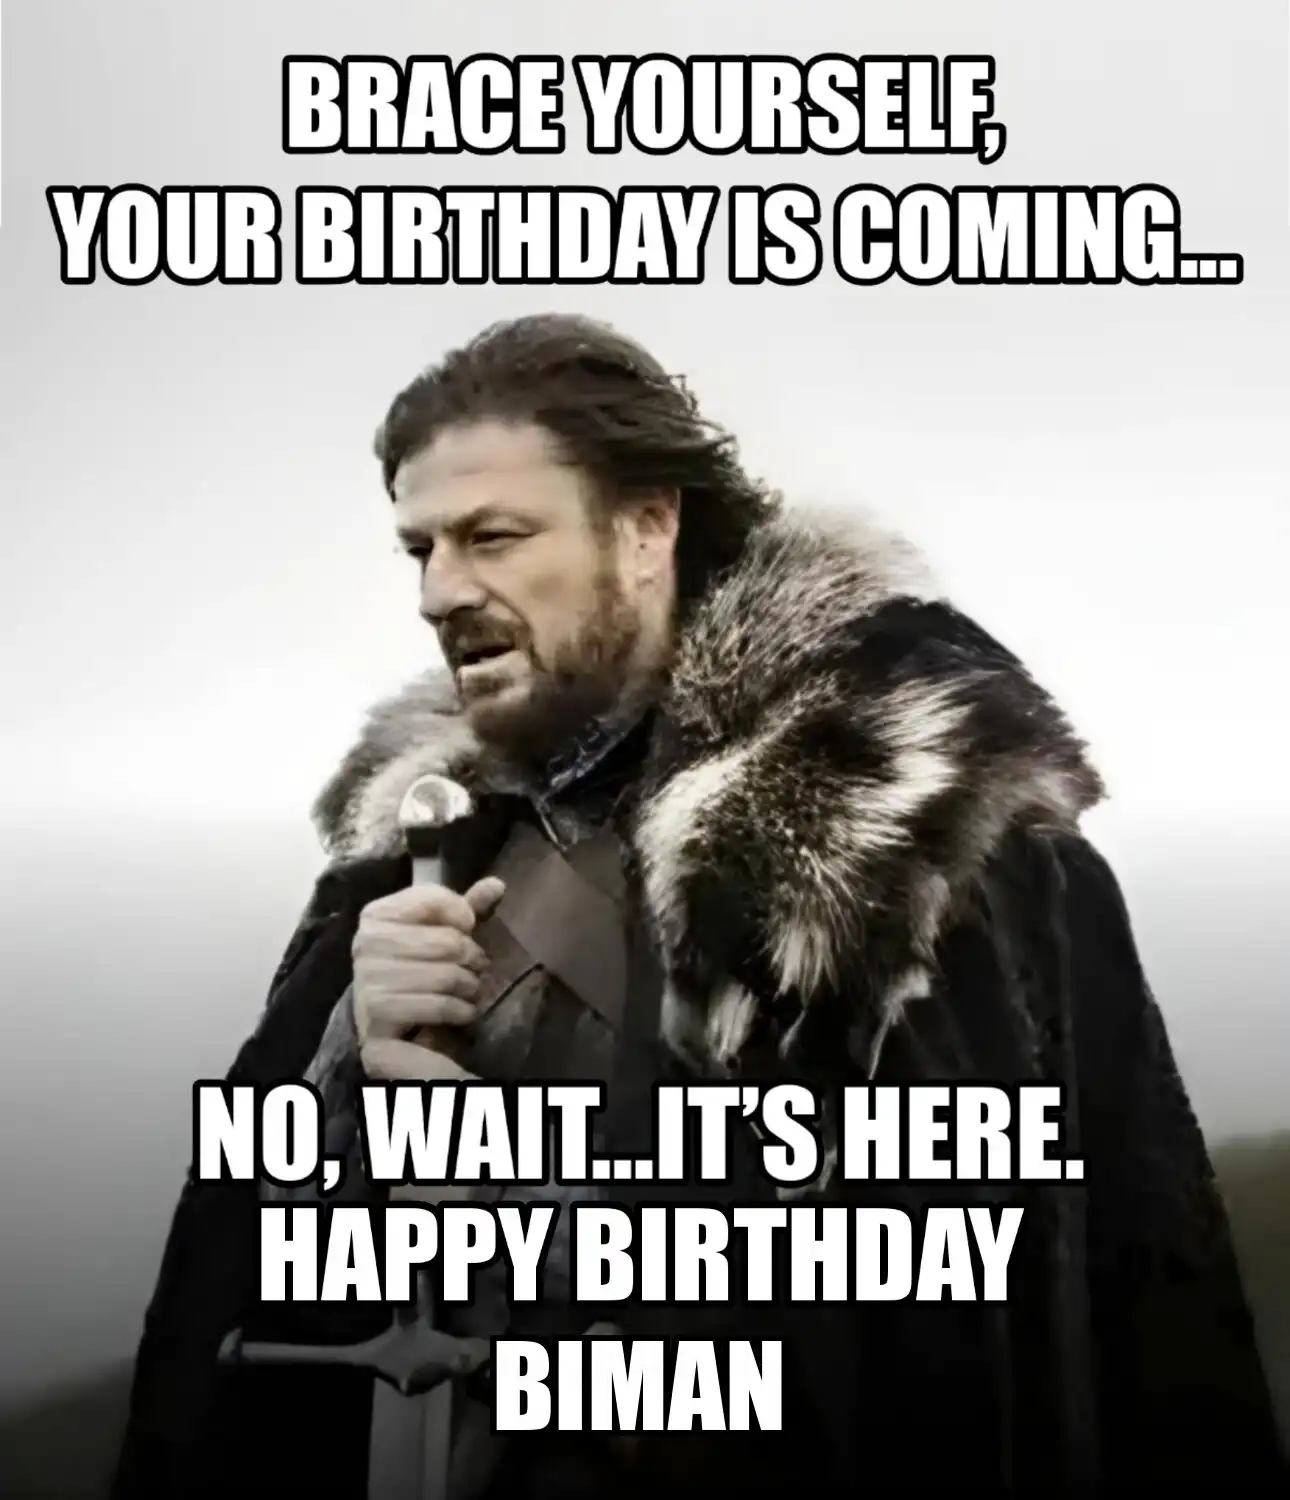 Happy Birthday Biman Brace Yourself Your Birthday Is Coming Meme